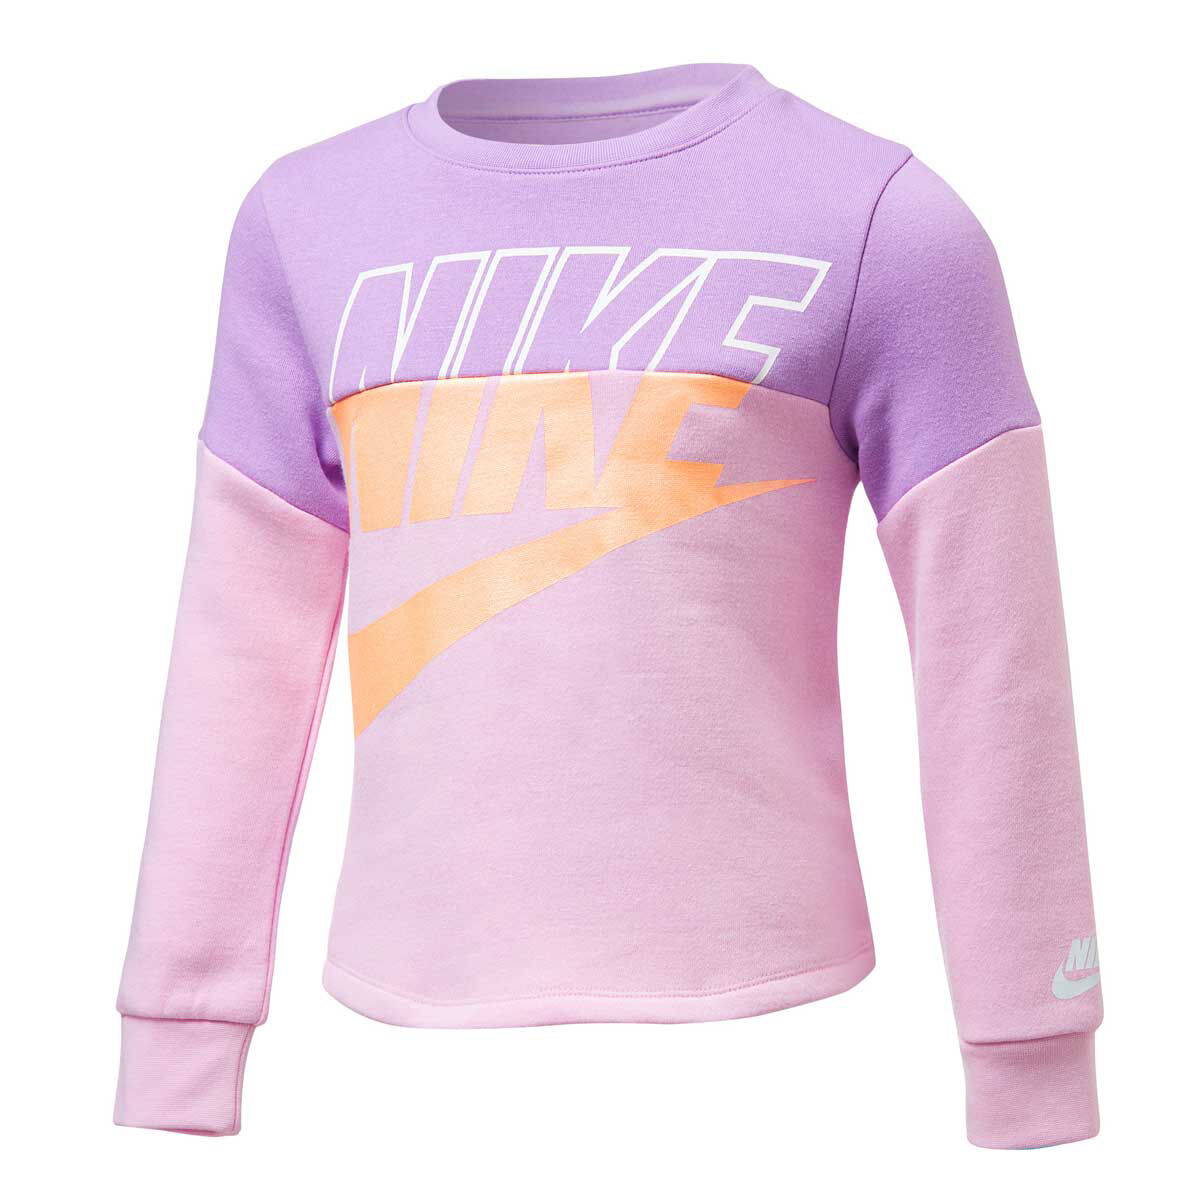 pink and purple nike sweatshirt